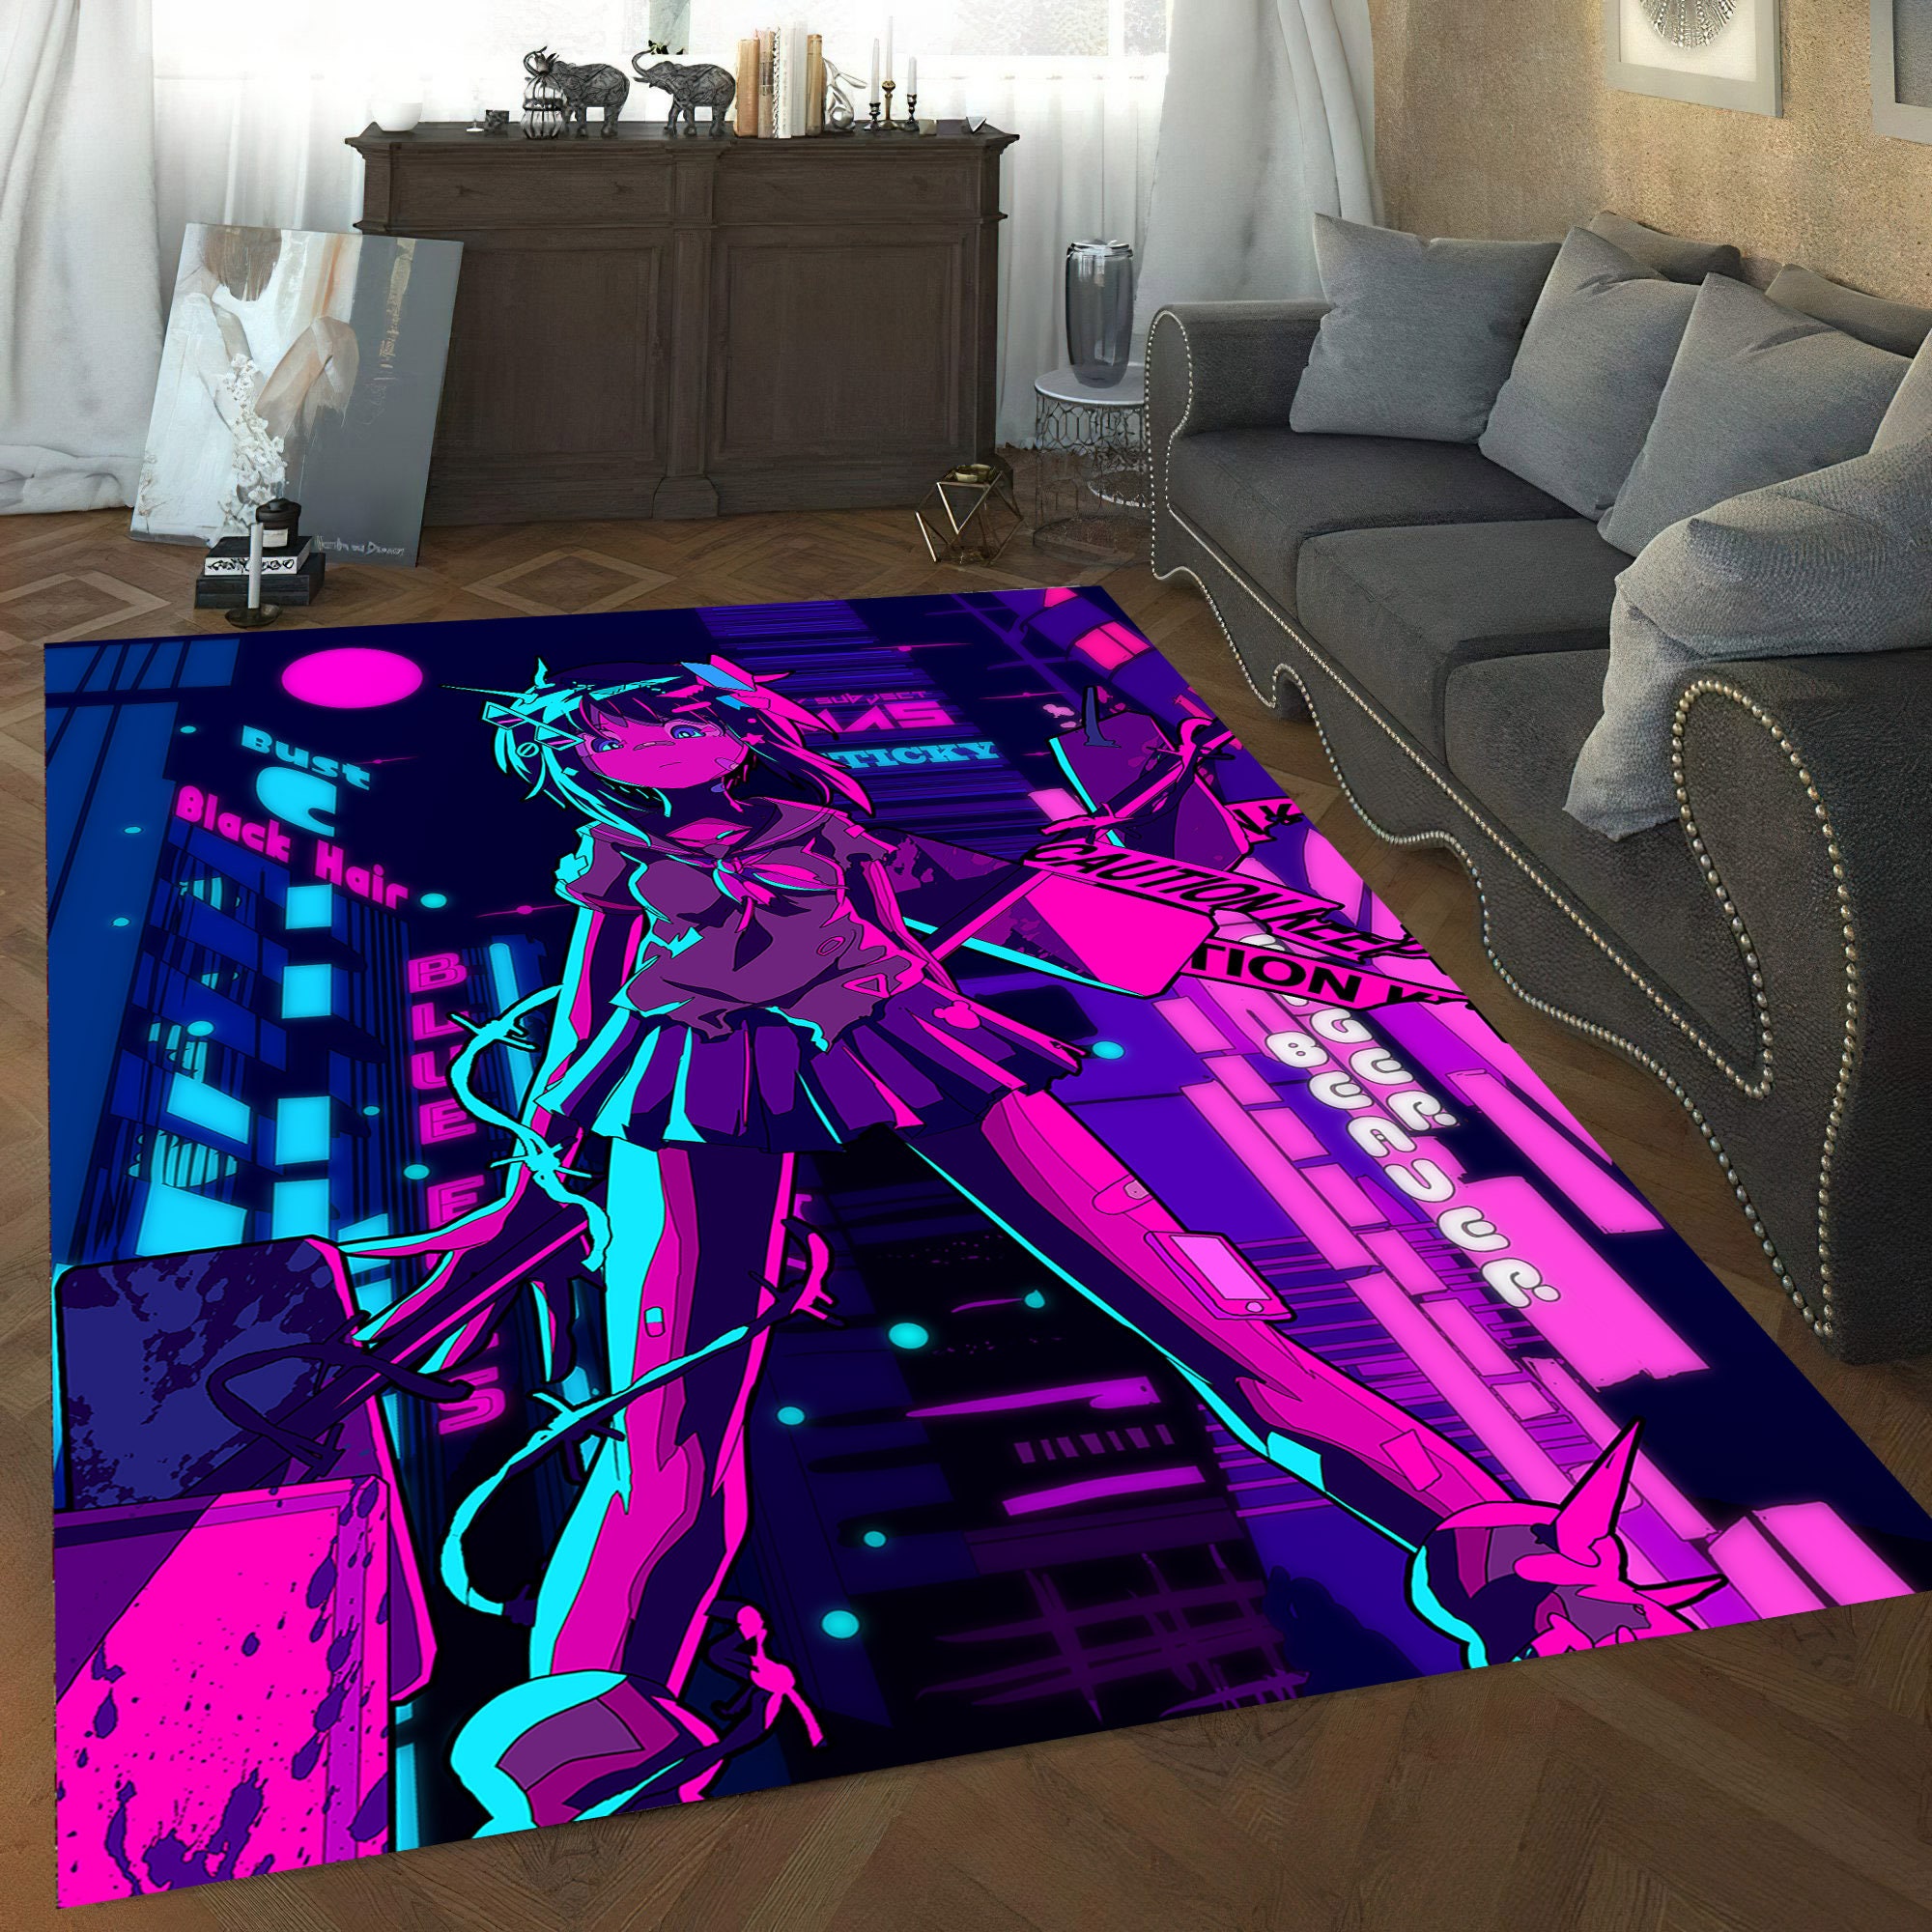 Demon slayder anime area rug bedroom rug floor decor home decor